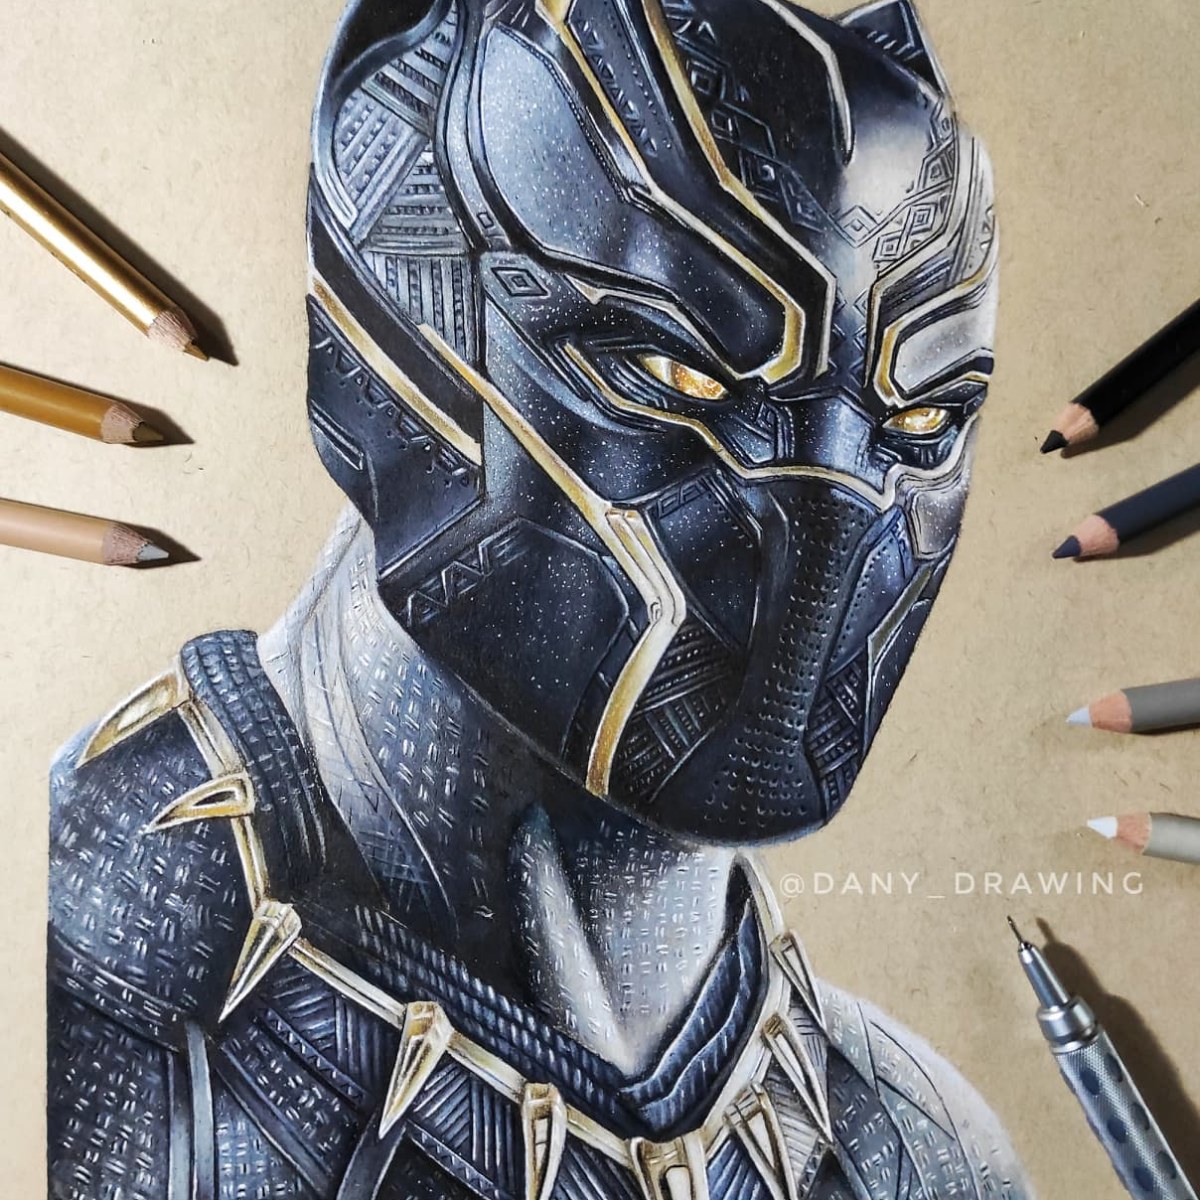 Black Panther Pencil drawing by Paul Stowe | Artfinder